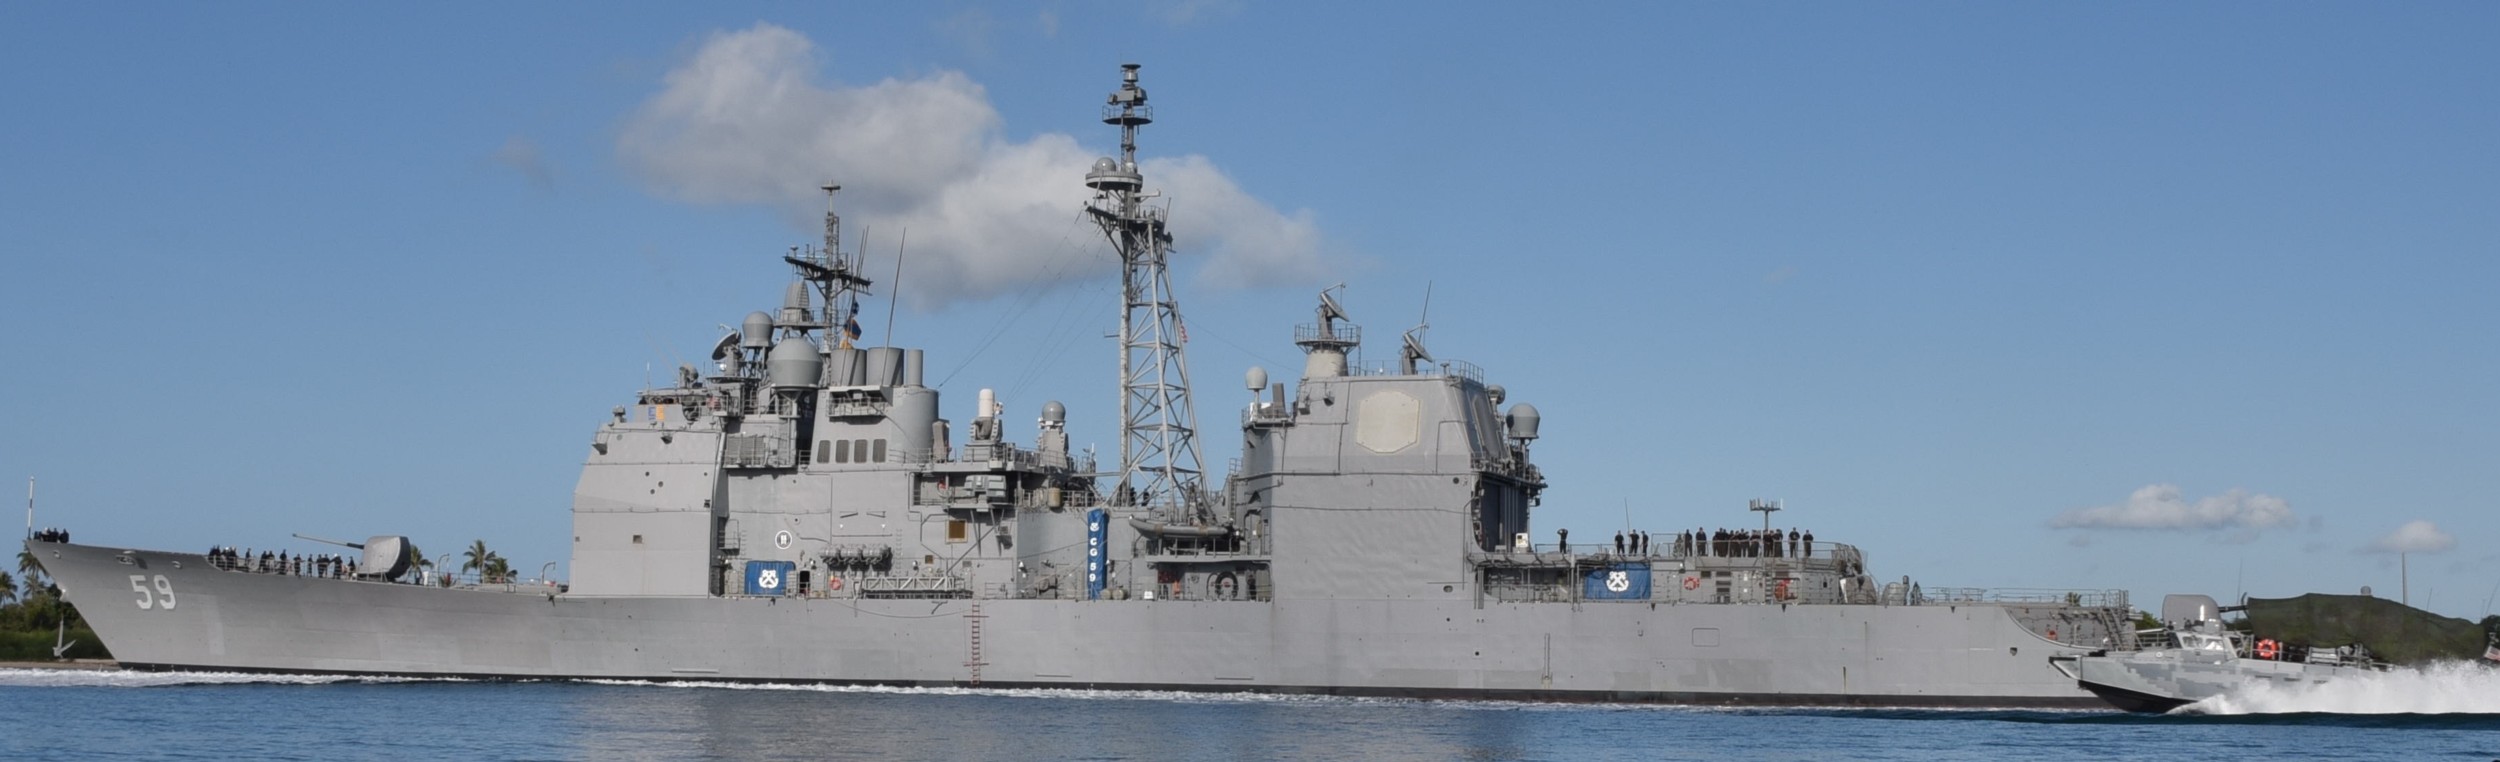 cg-59 uss princeton ticonderoga class guided missile cruiser aegis us navy joint base pearl harbor hickam hawaii 52